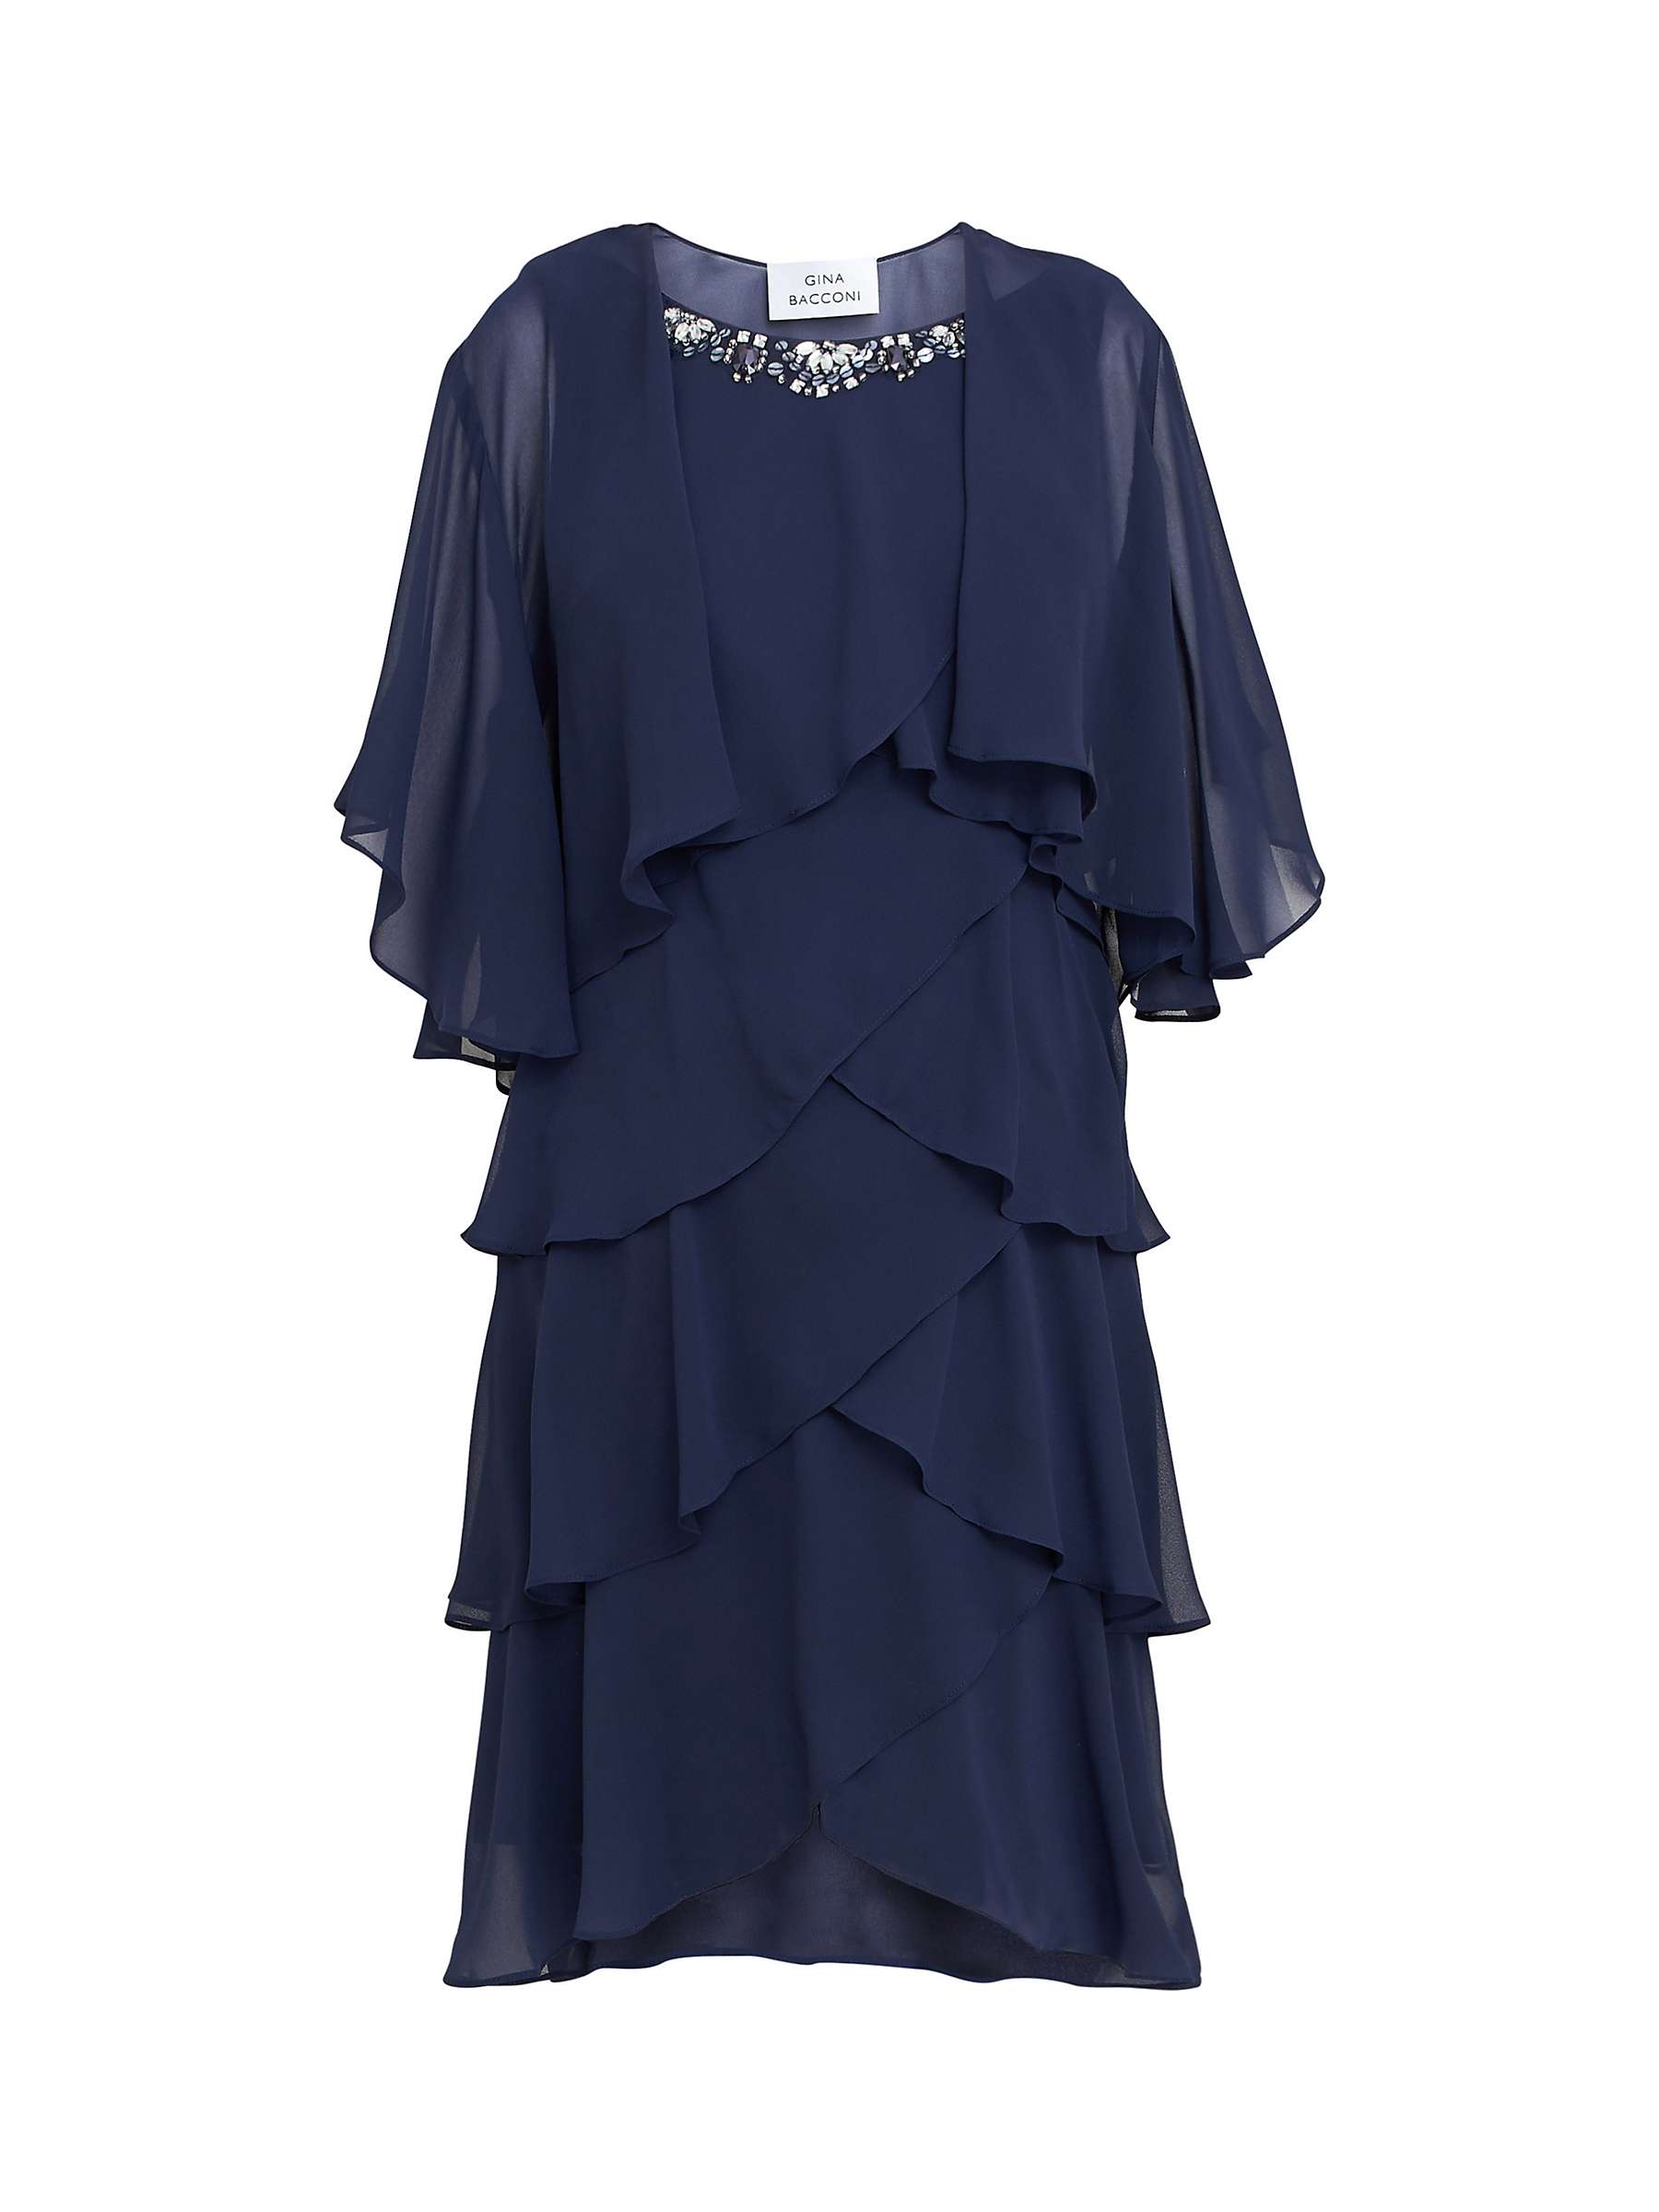 Buy Gina Bacconi Toni Chiffon Tier Jacket and Beaded Neck Dress, Navy Online at johnlewis.com